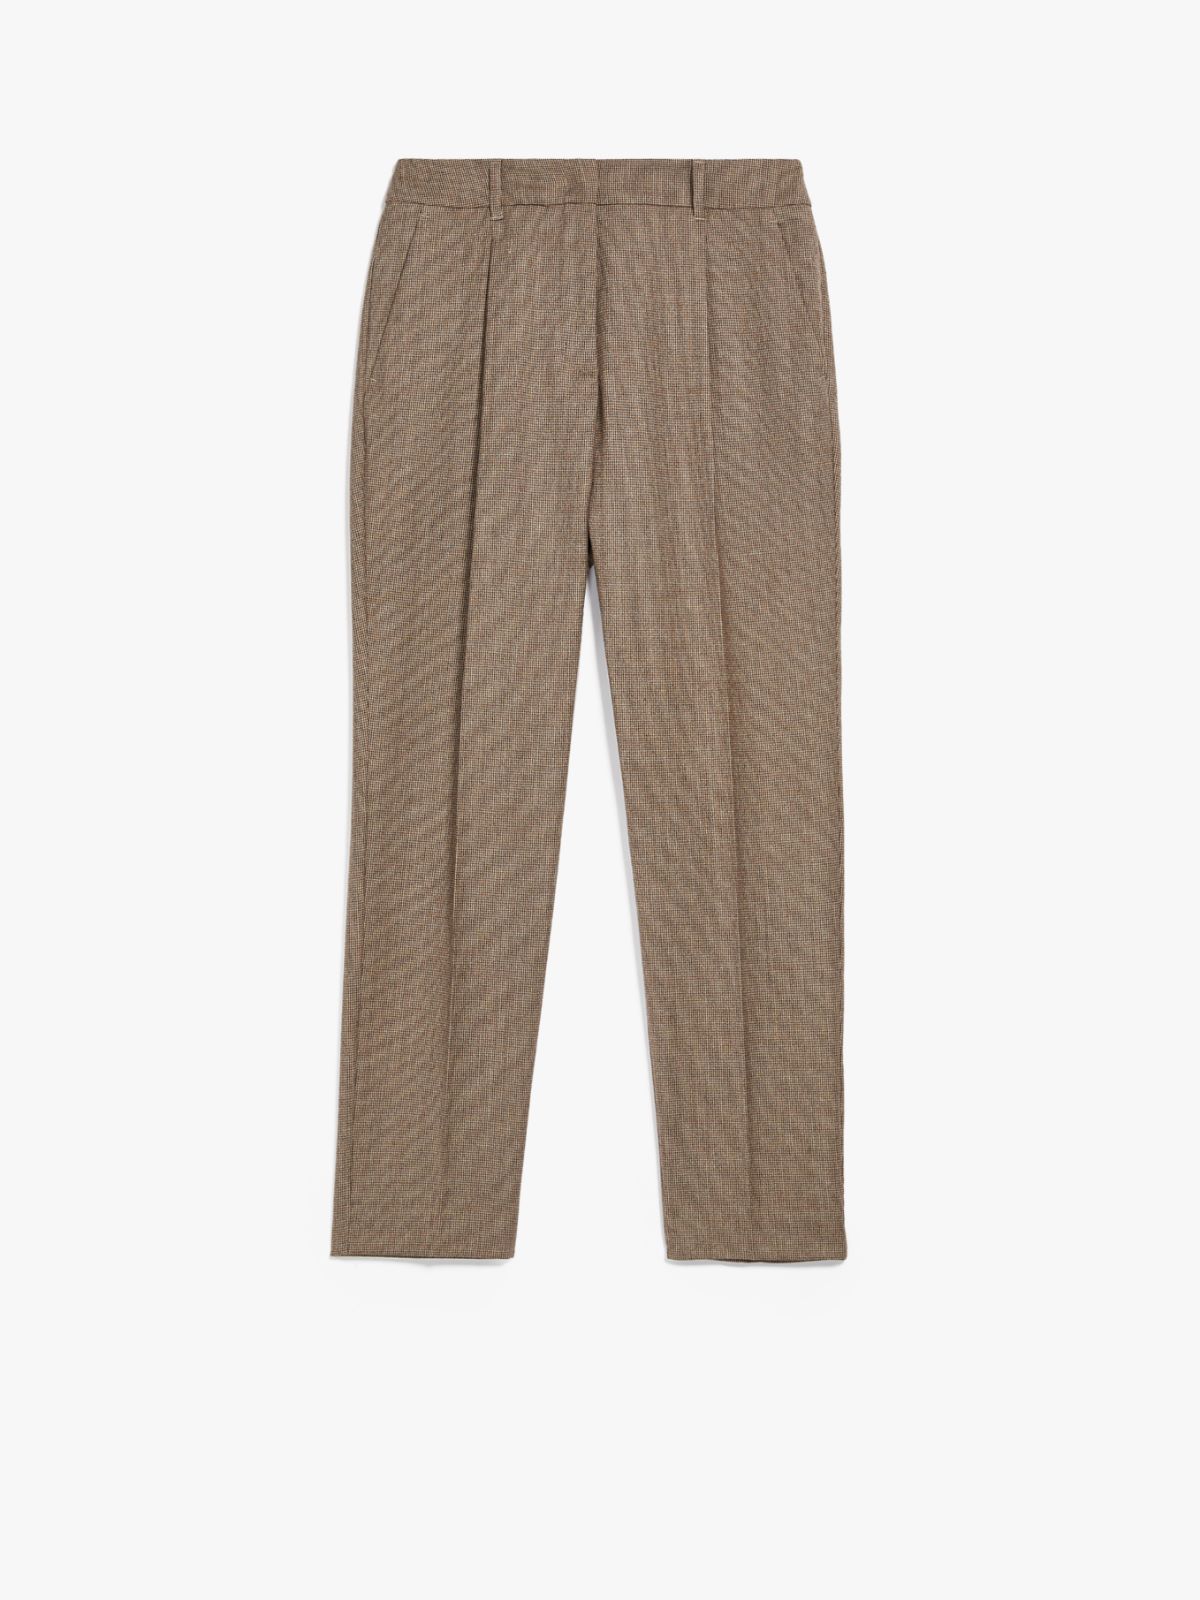 Wool flannel trousers - TOBACCO - Weekend Max Mara - 5